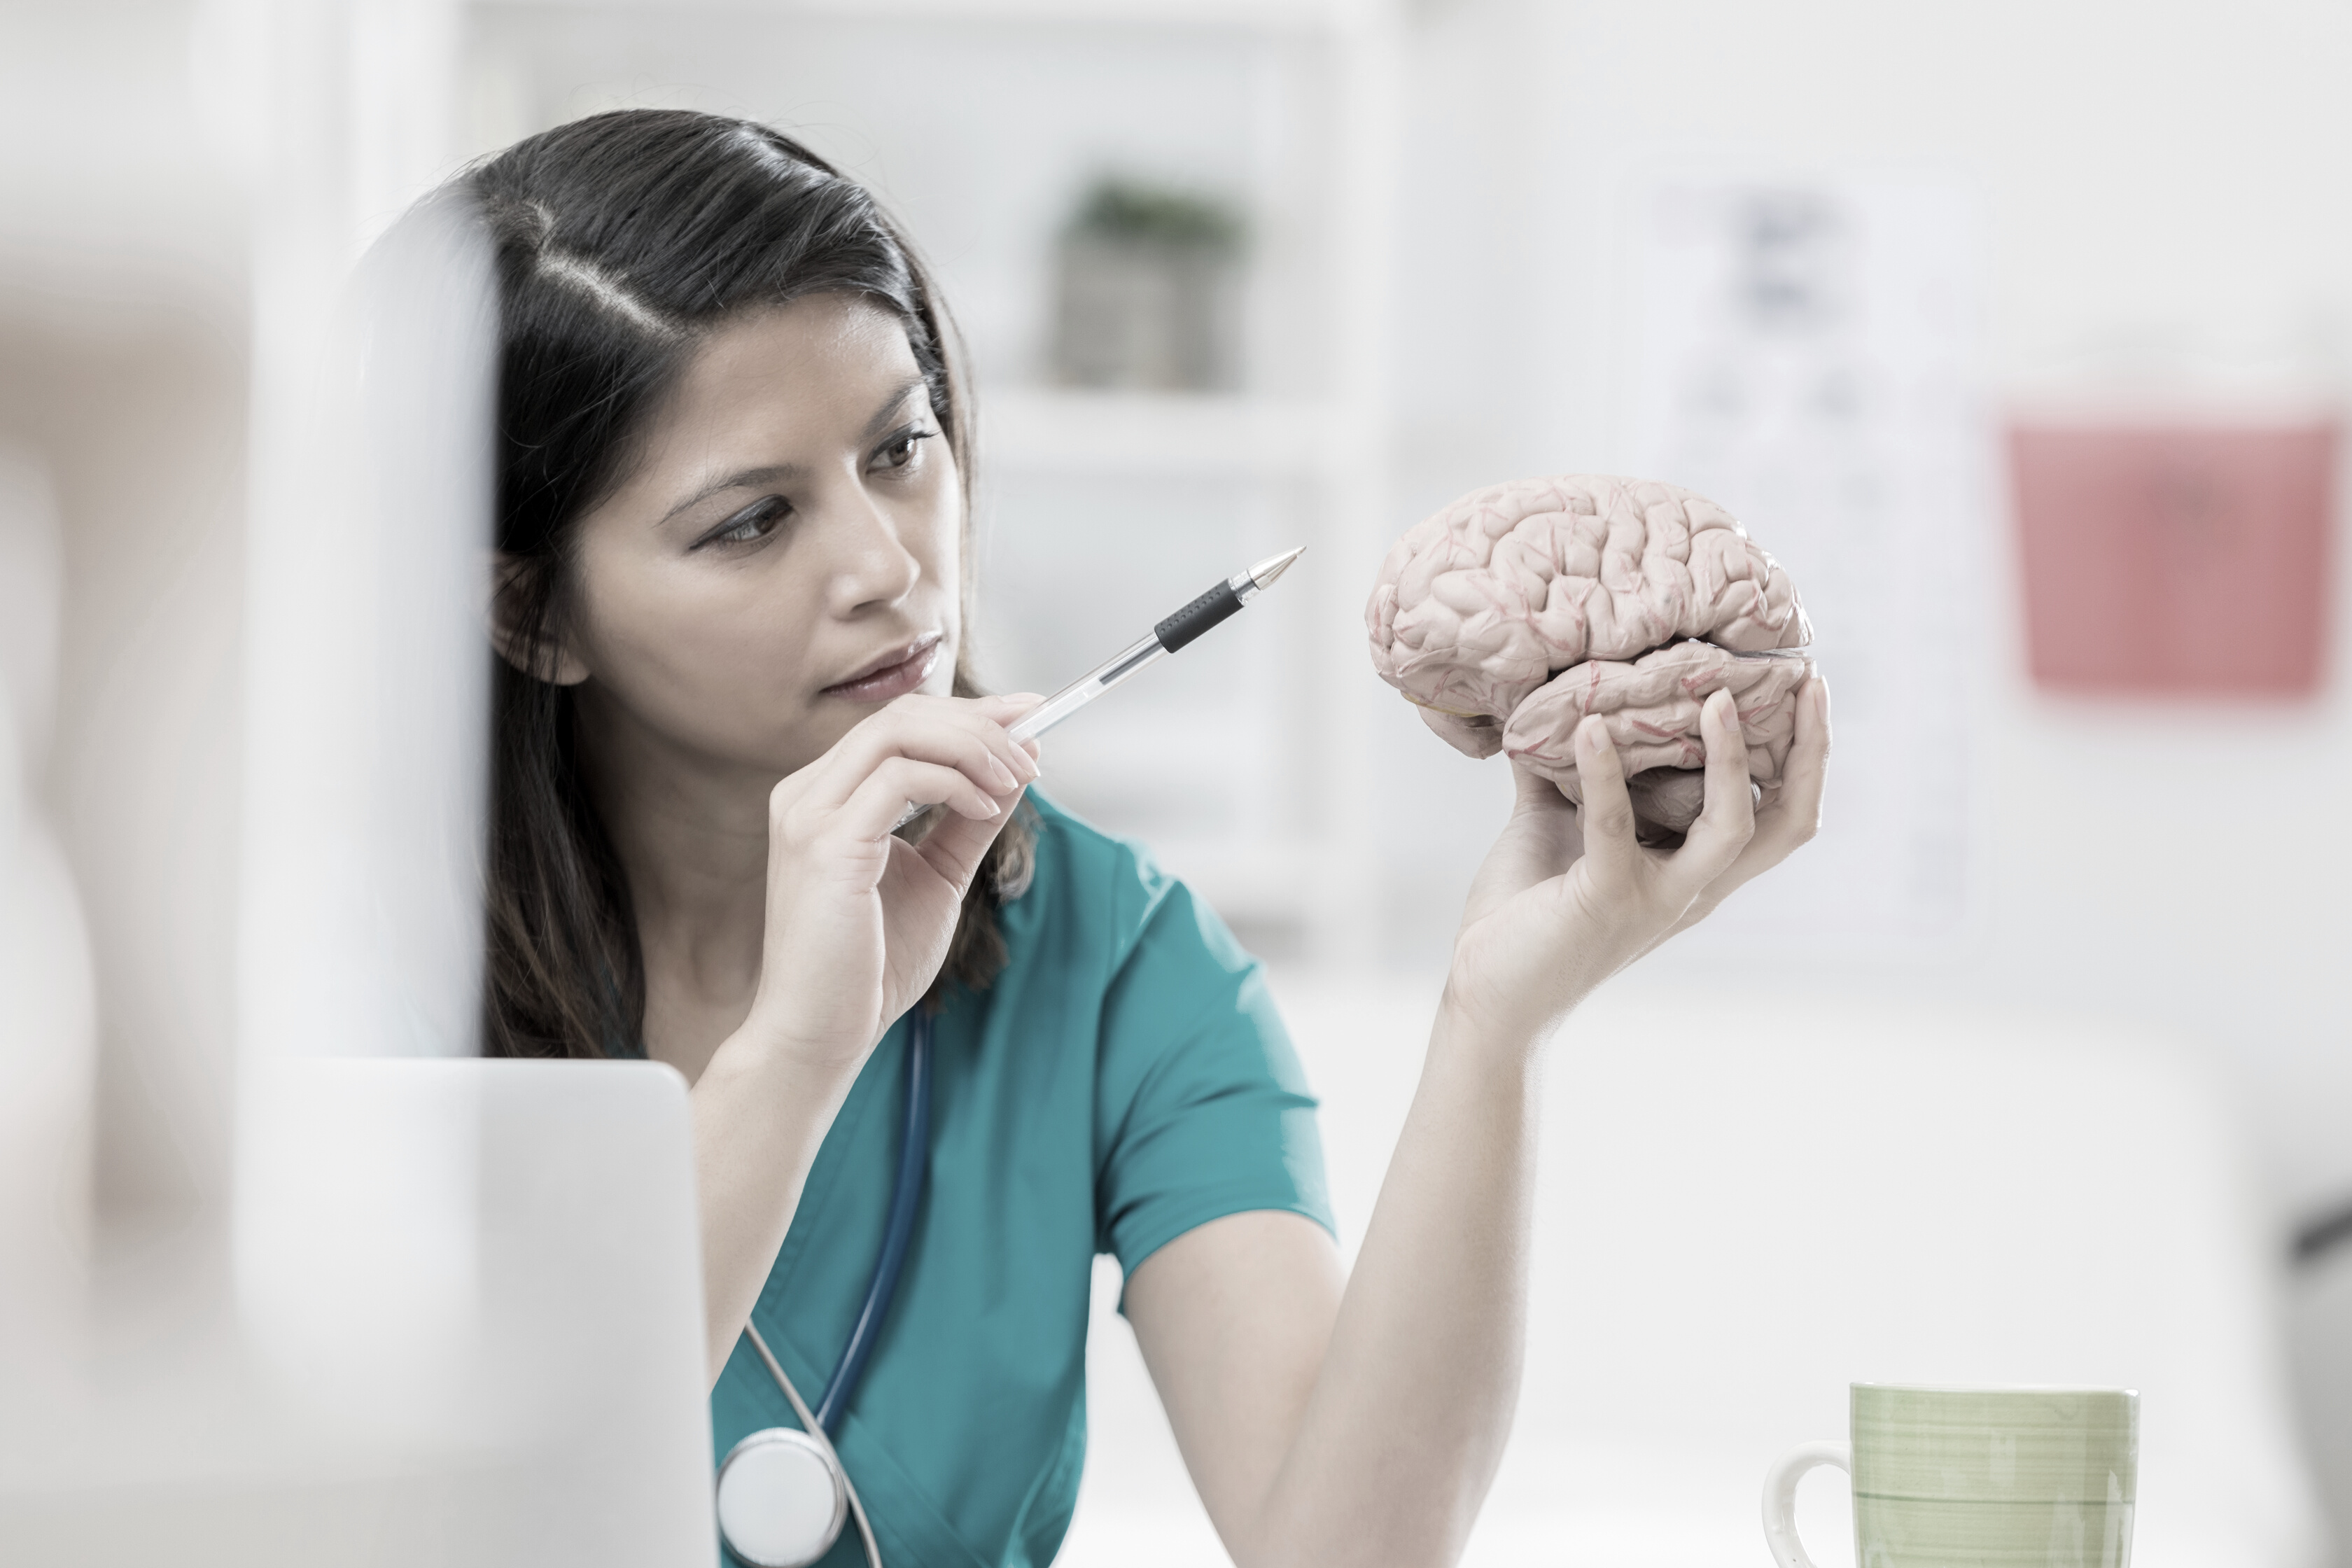 Neurologist studies a human brain model